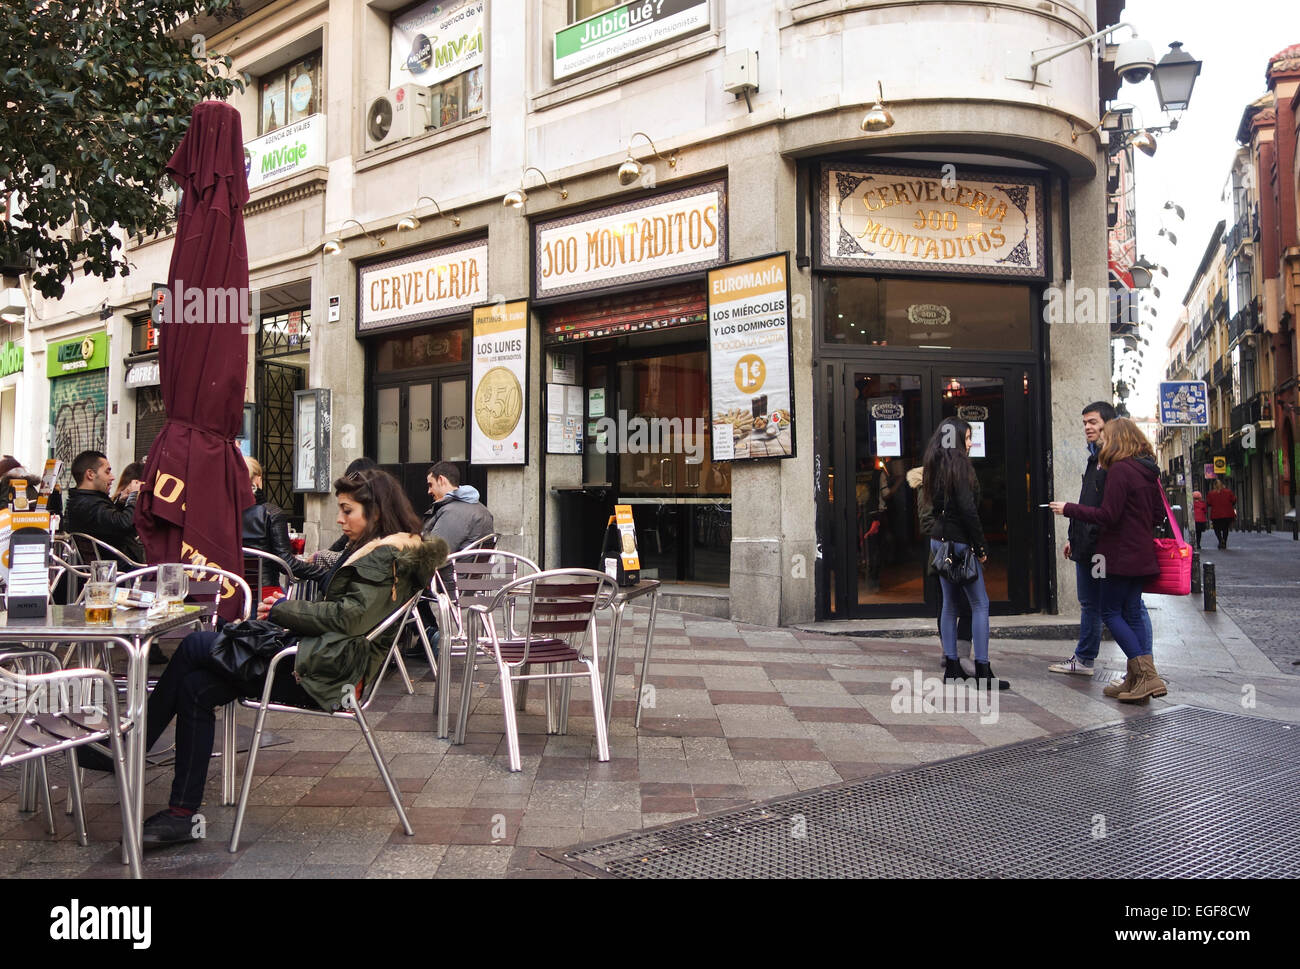 Cerveceria 100 montaditos, Tapas bar chain, terrace at calle de la montera,  Madrid, Spain Stock Photo - Alamy